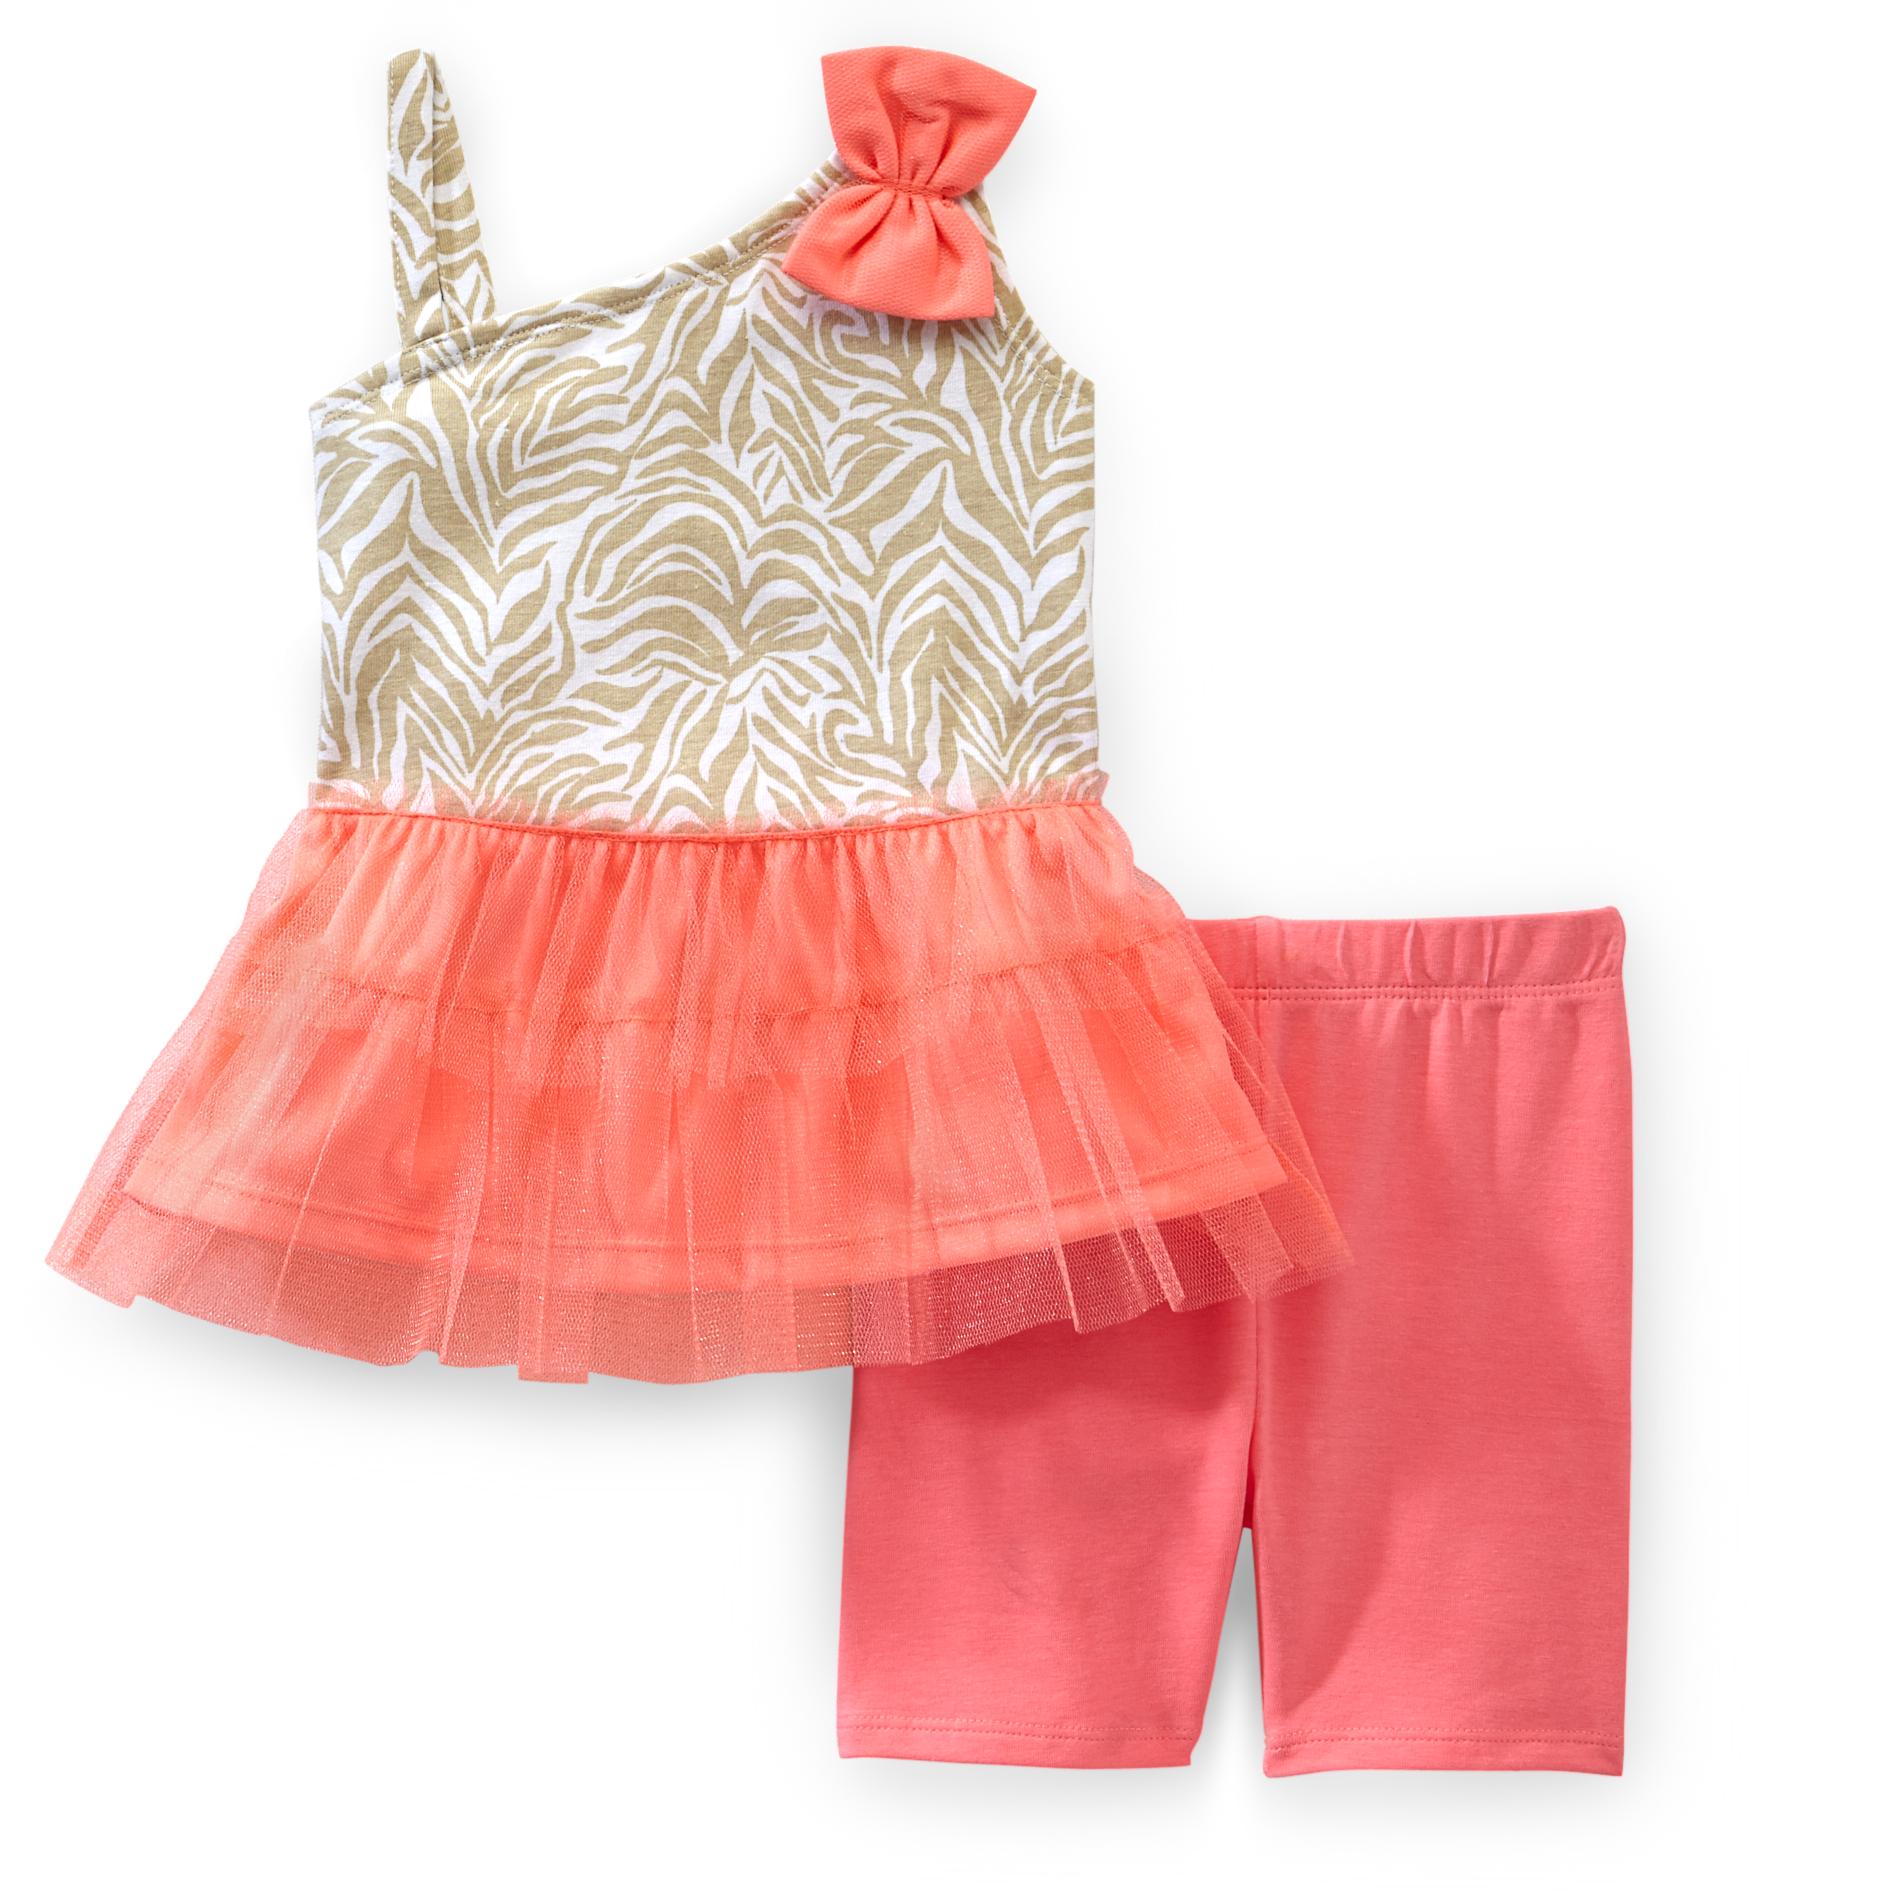 WonderKids Infant & Toddler Girl's Tutu Dress & Shorts - Zebra Print